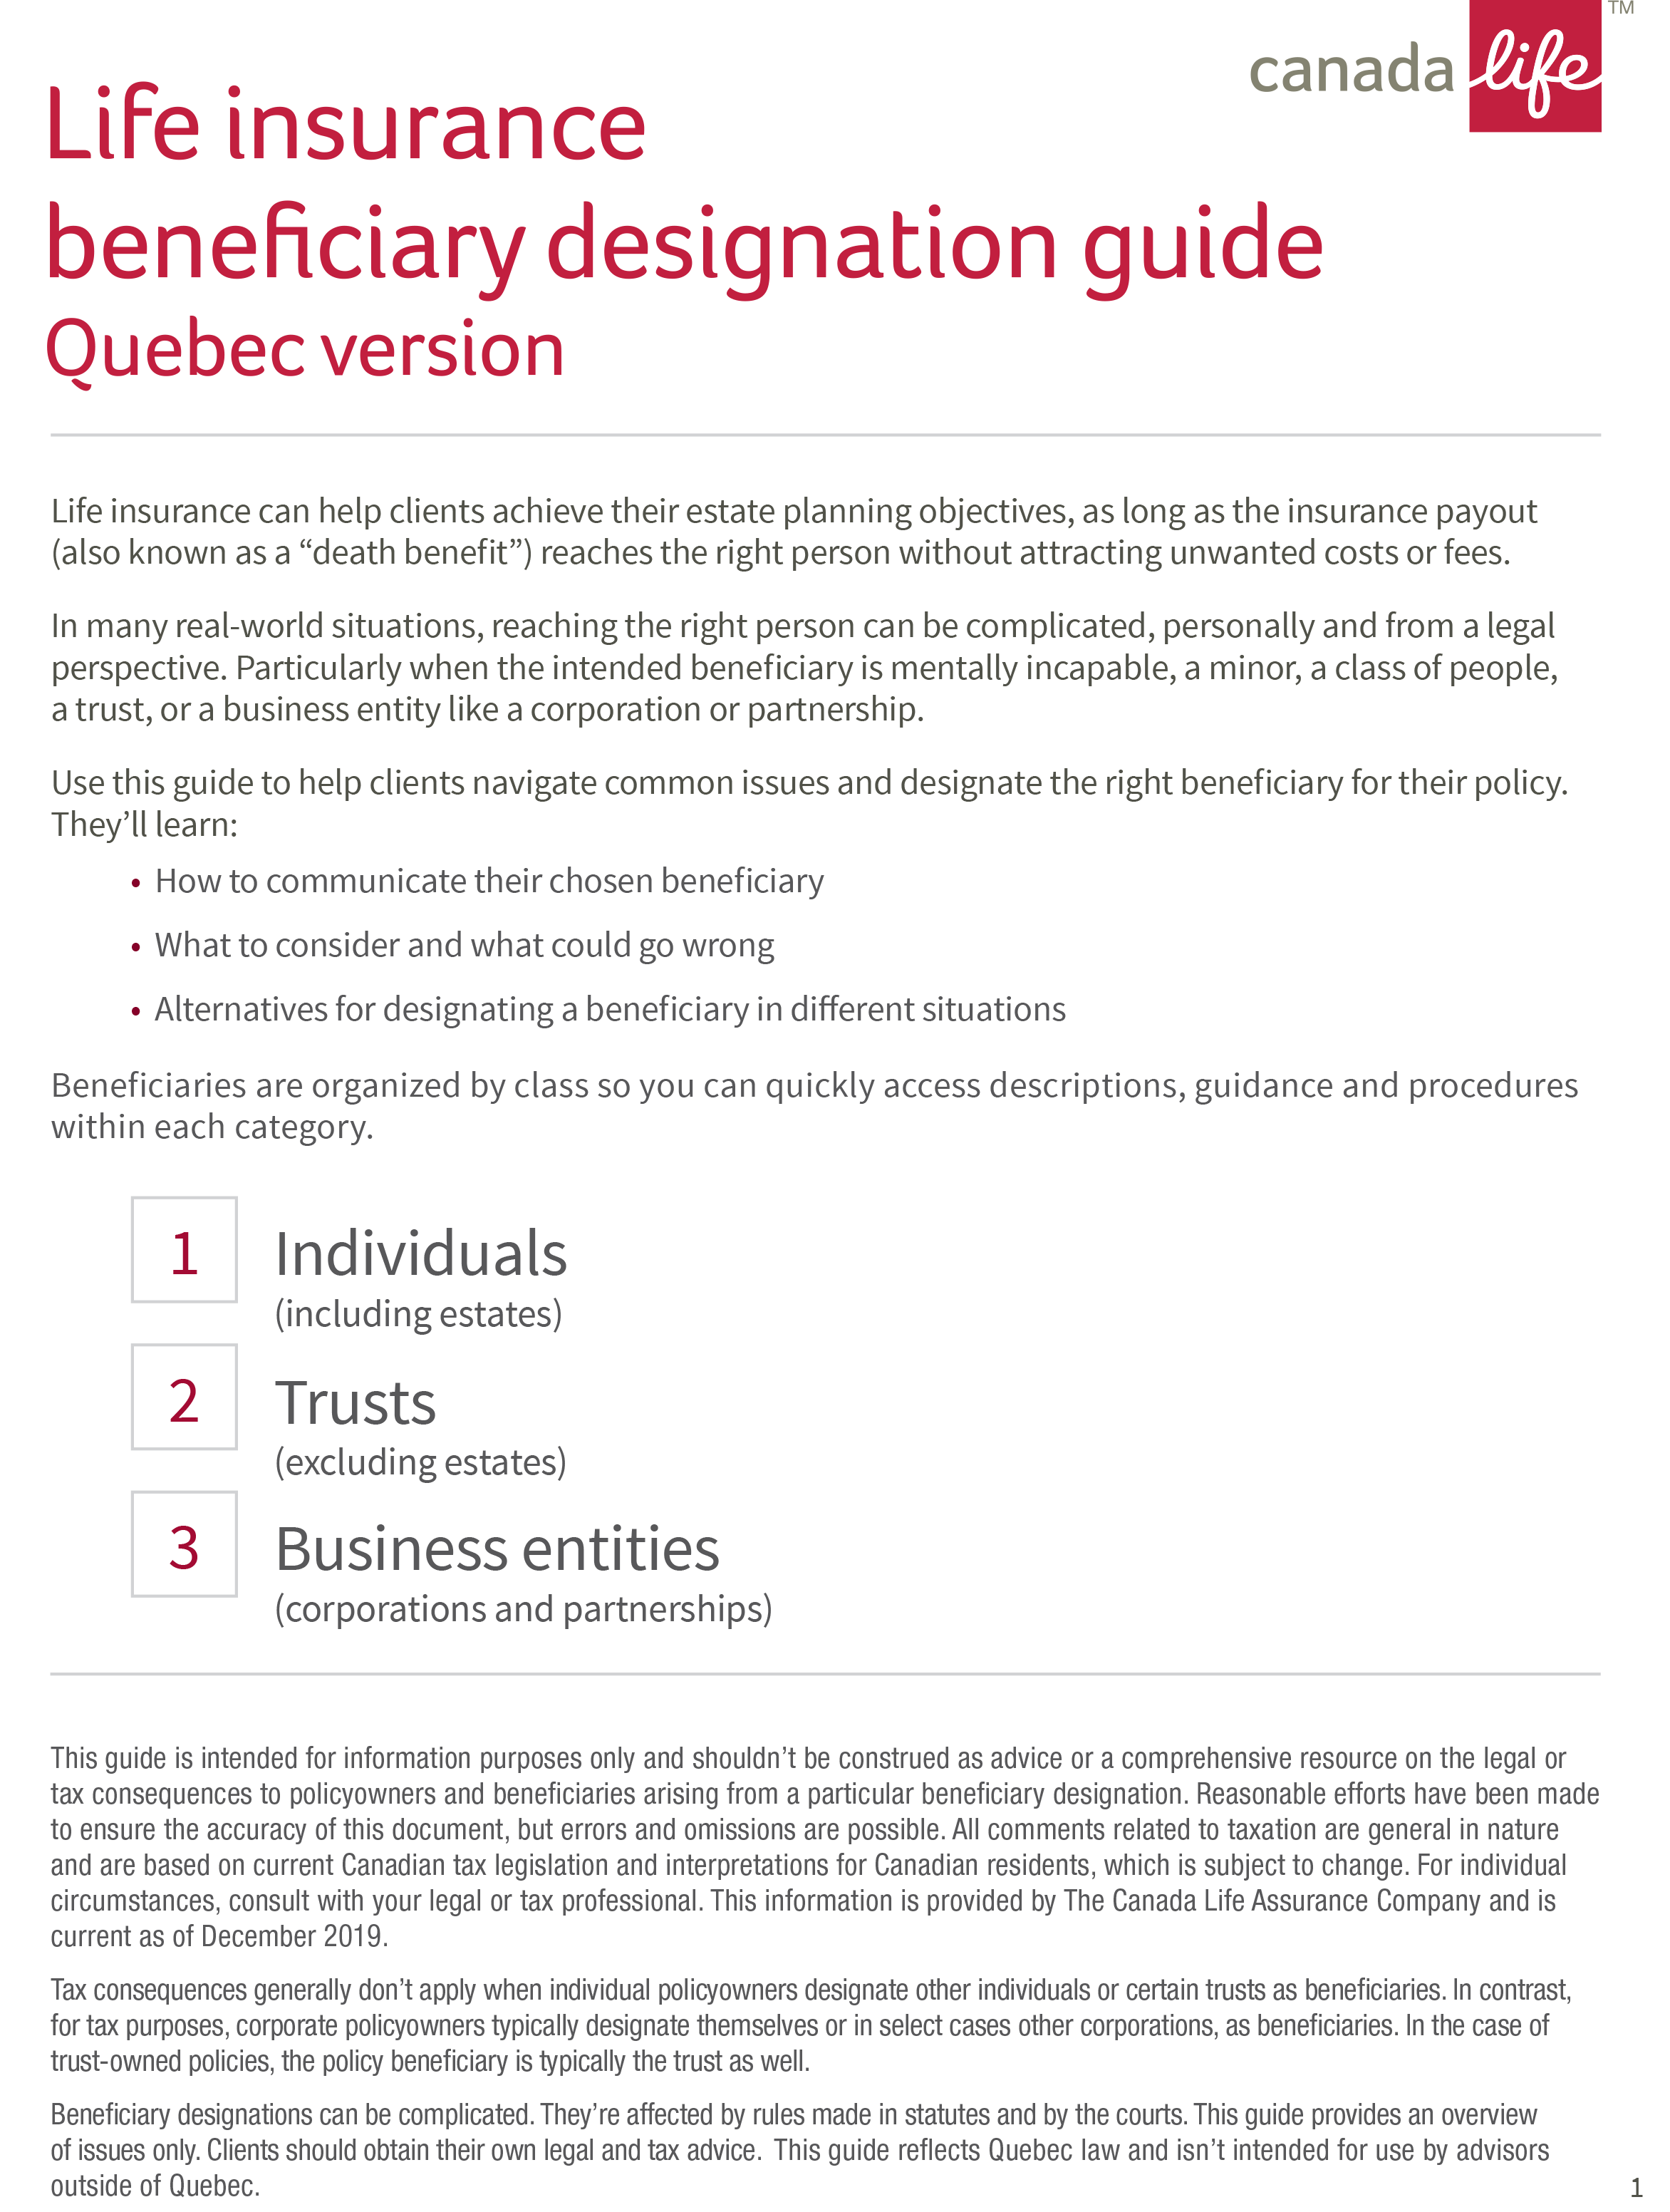 Life insurance beneficiary designation guide (Quebec) image